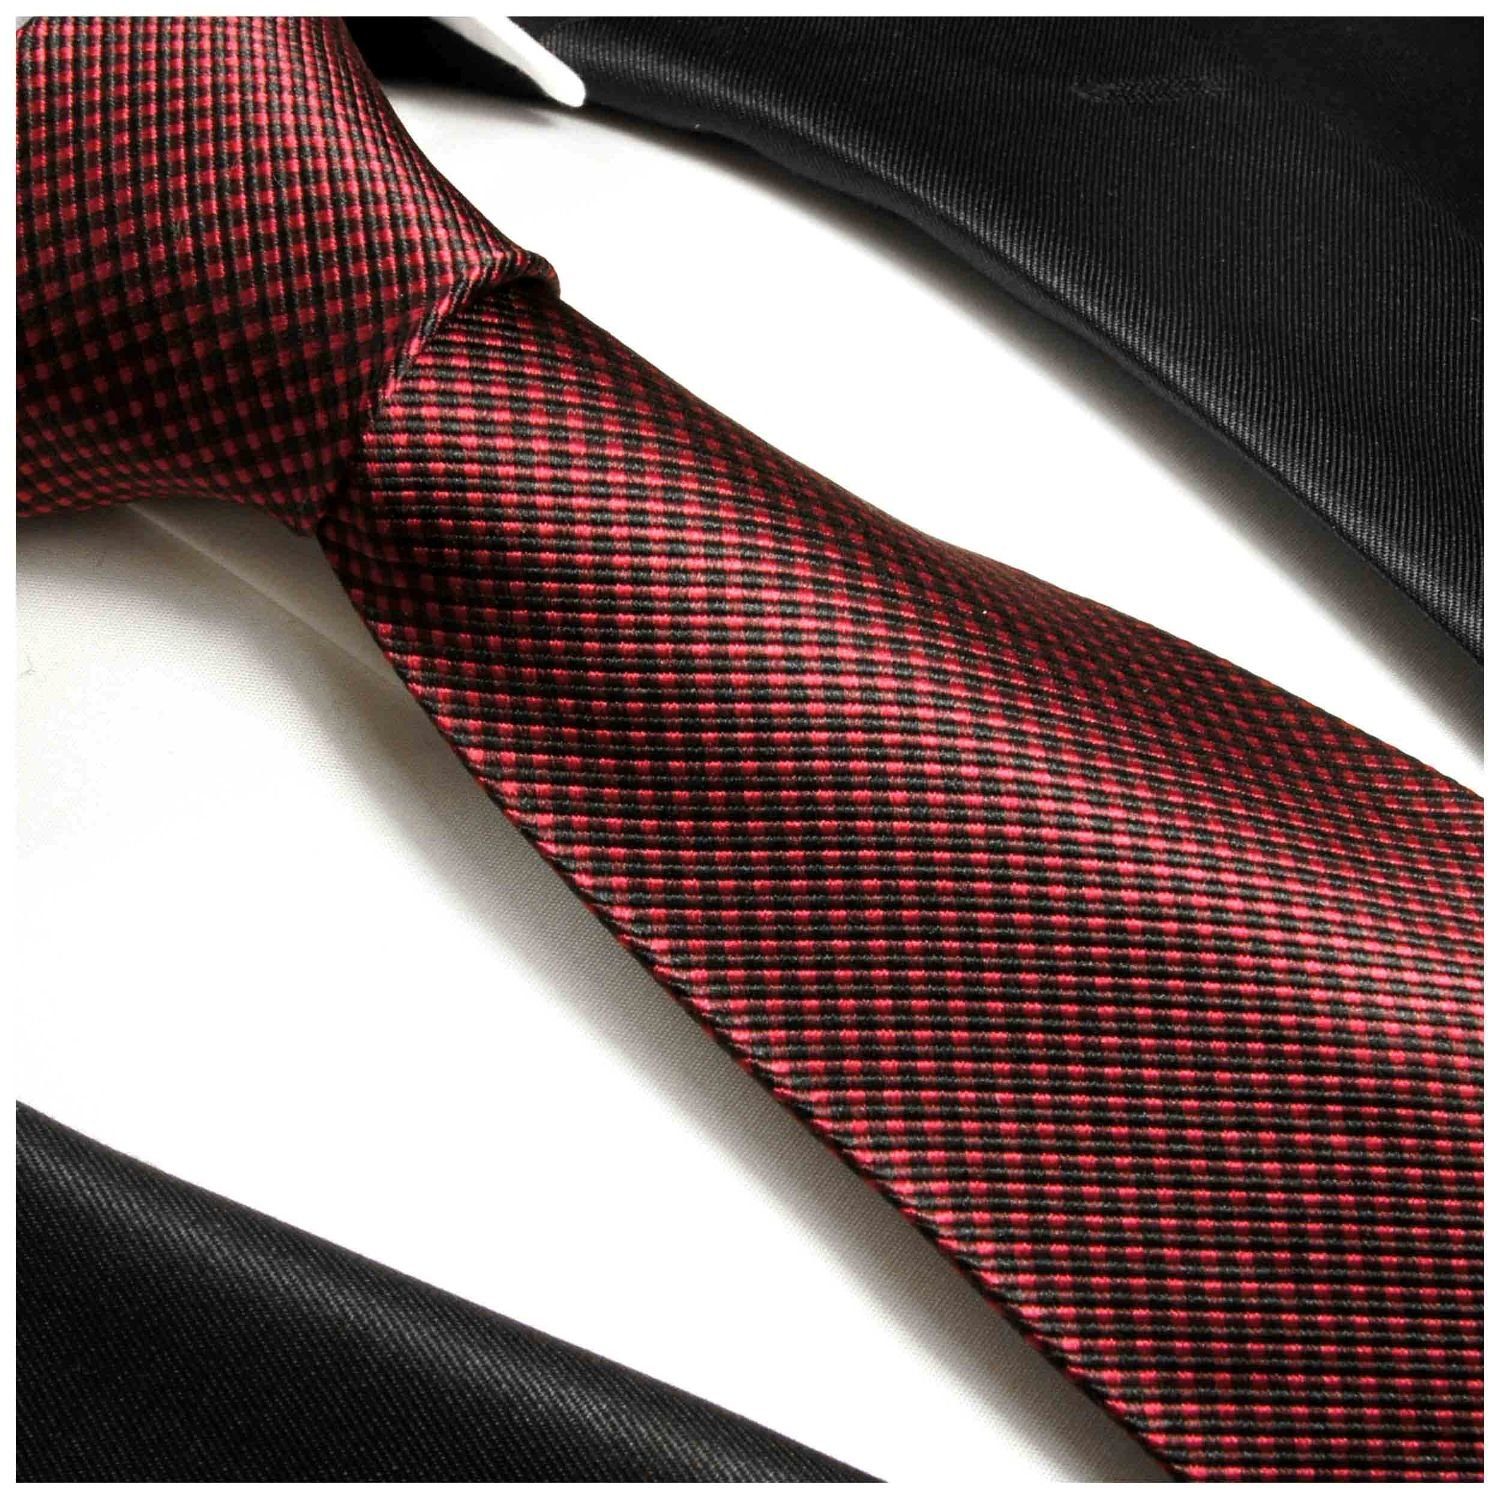 Paul Designer 450 Breit Herren (8cm), schwarz Seide (165cm), Malone rot kariert Schlips Extra Krawatte 100% lang Seidenkrawatte modern